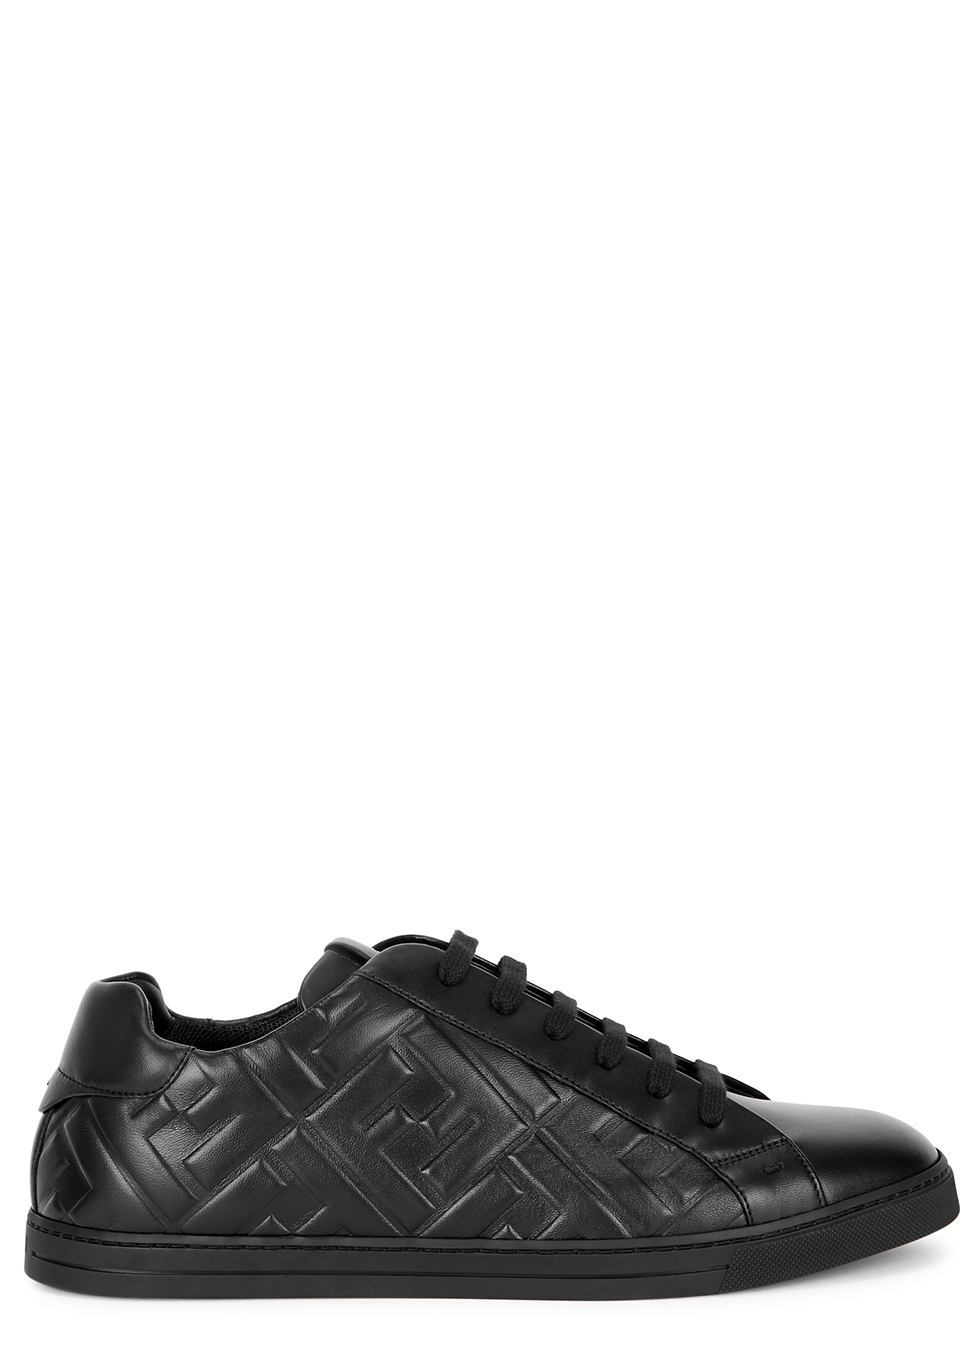 Fendi FF black leather sneakers - Harvey Nichols